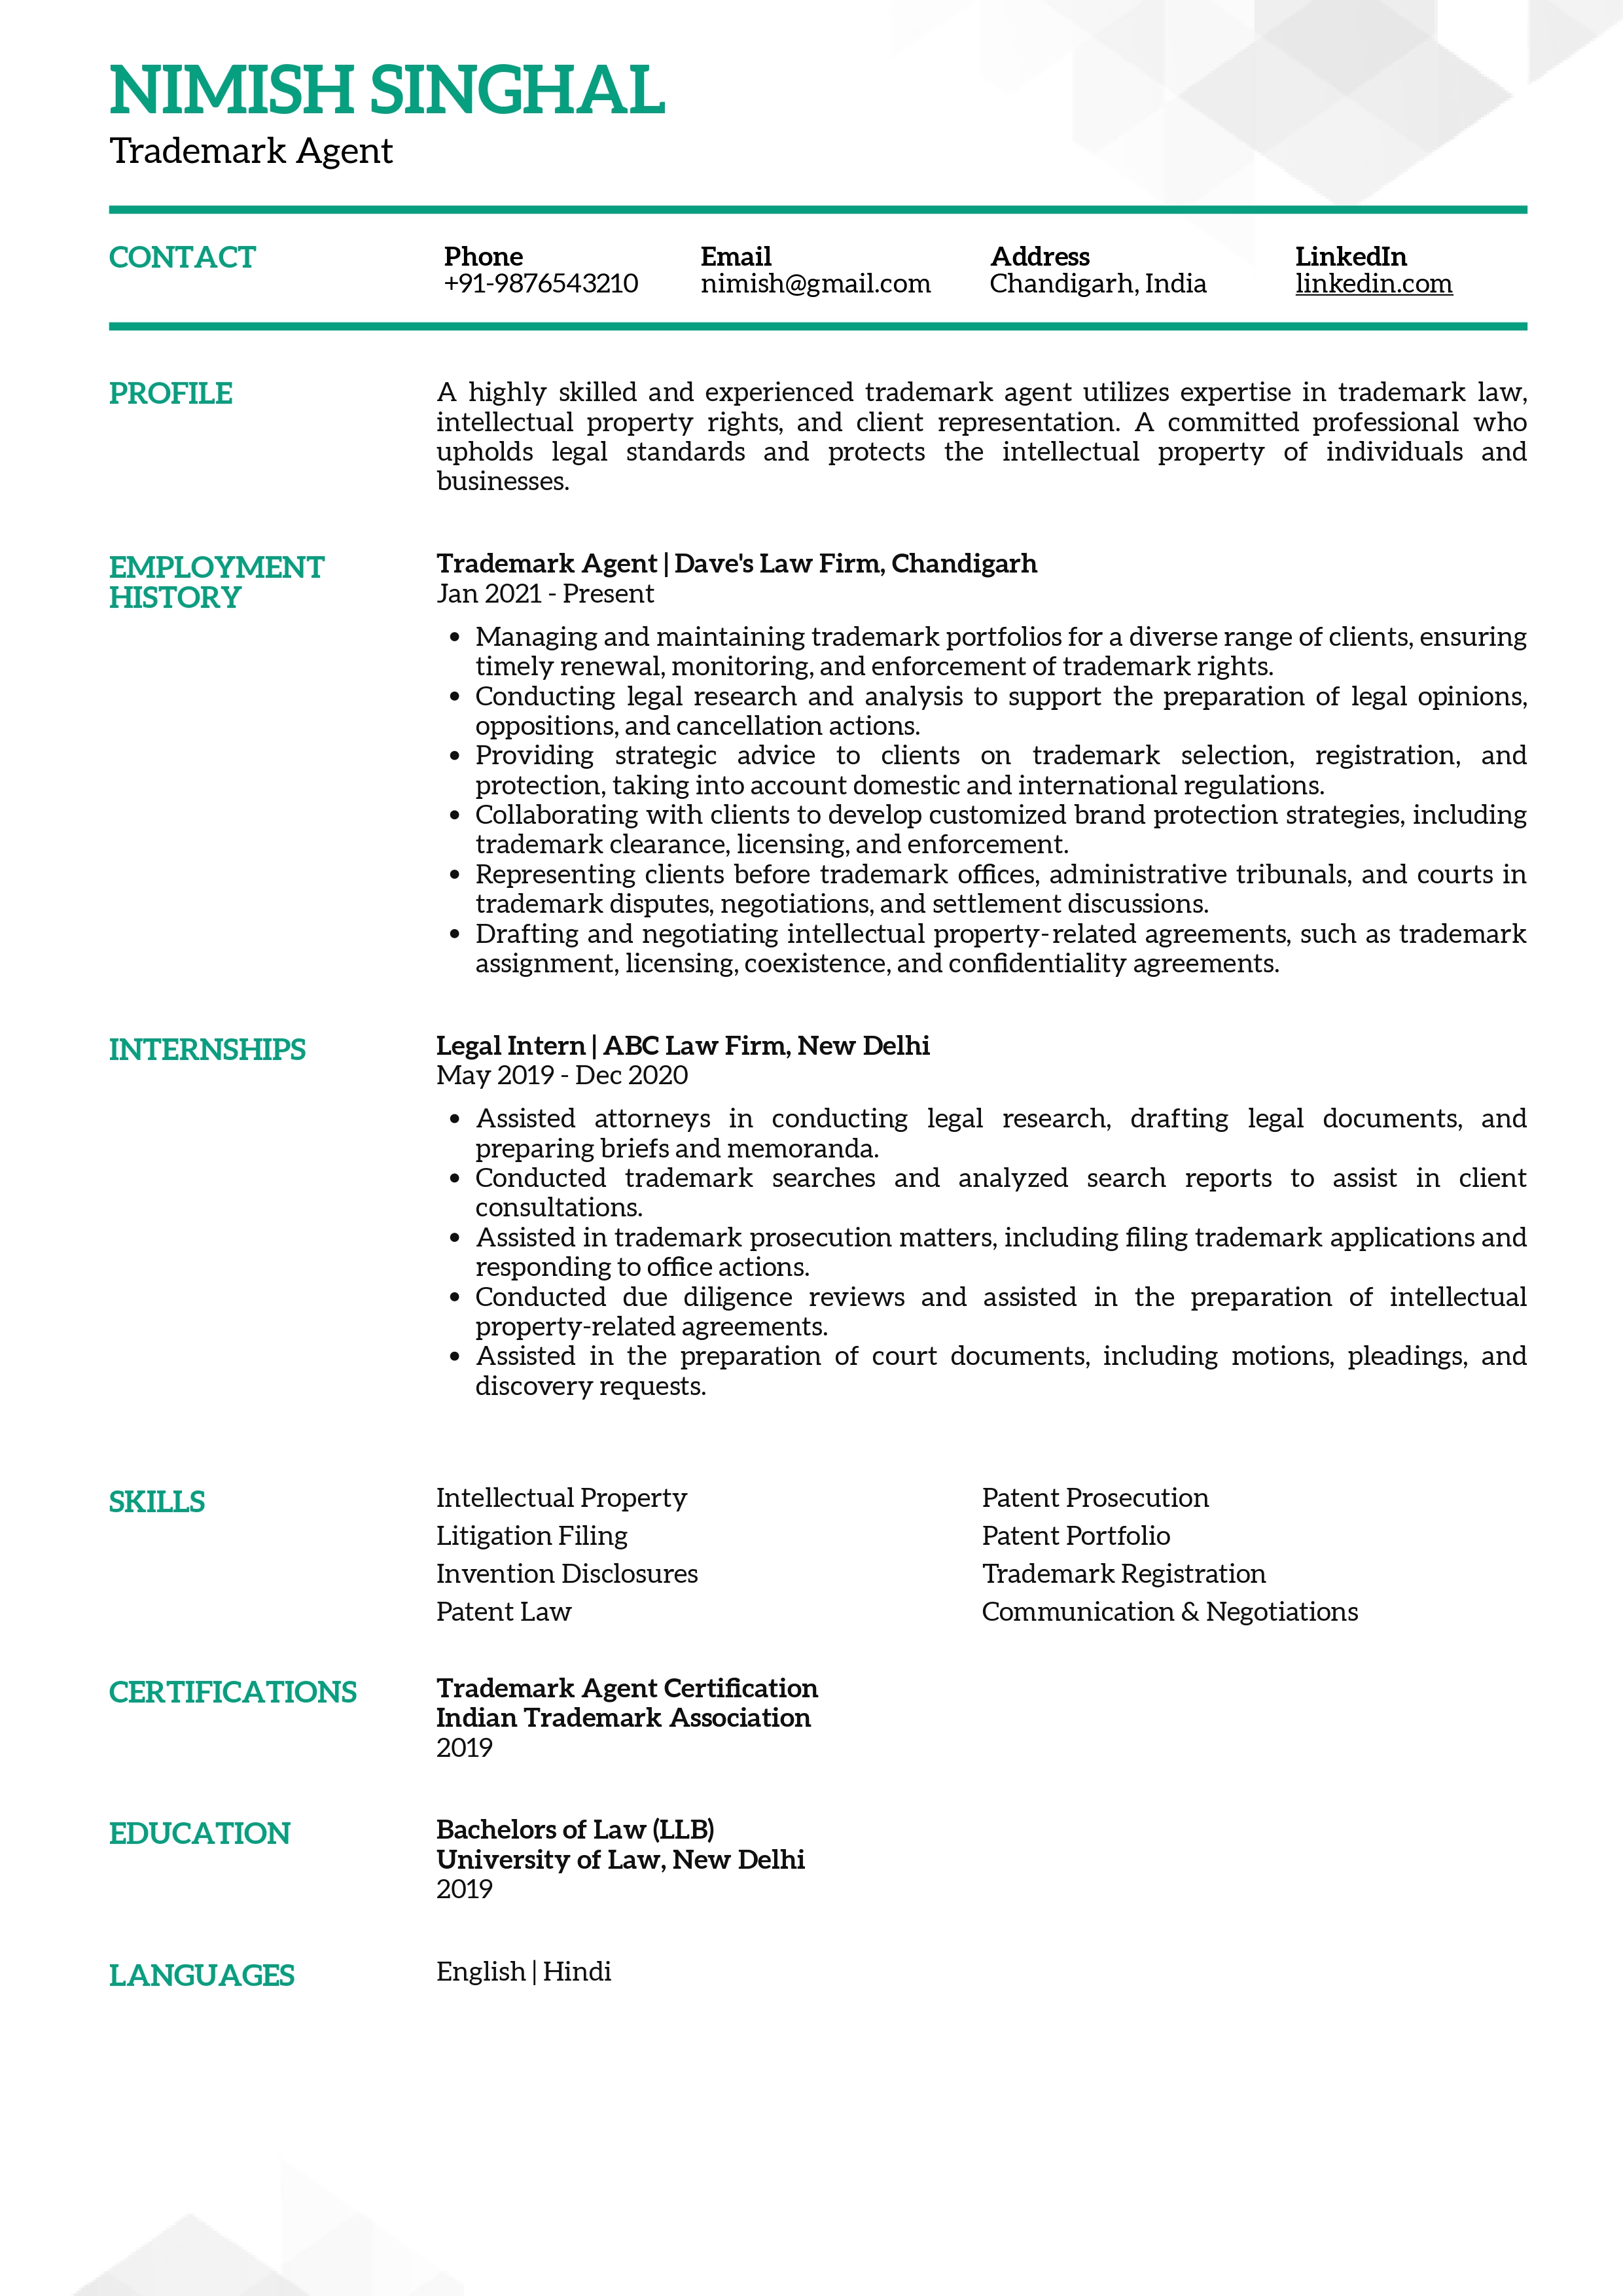 Resume of Trademark Agent built on Resumod